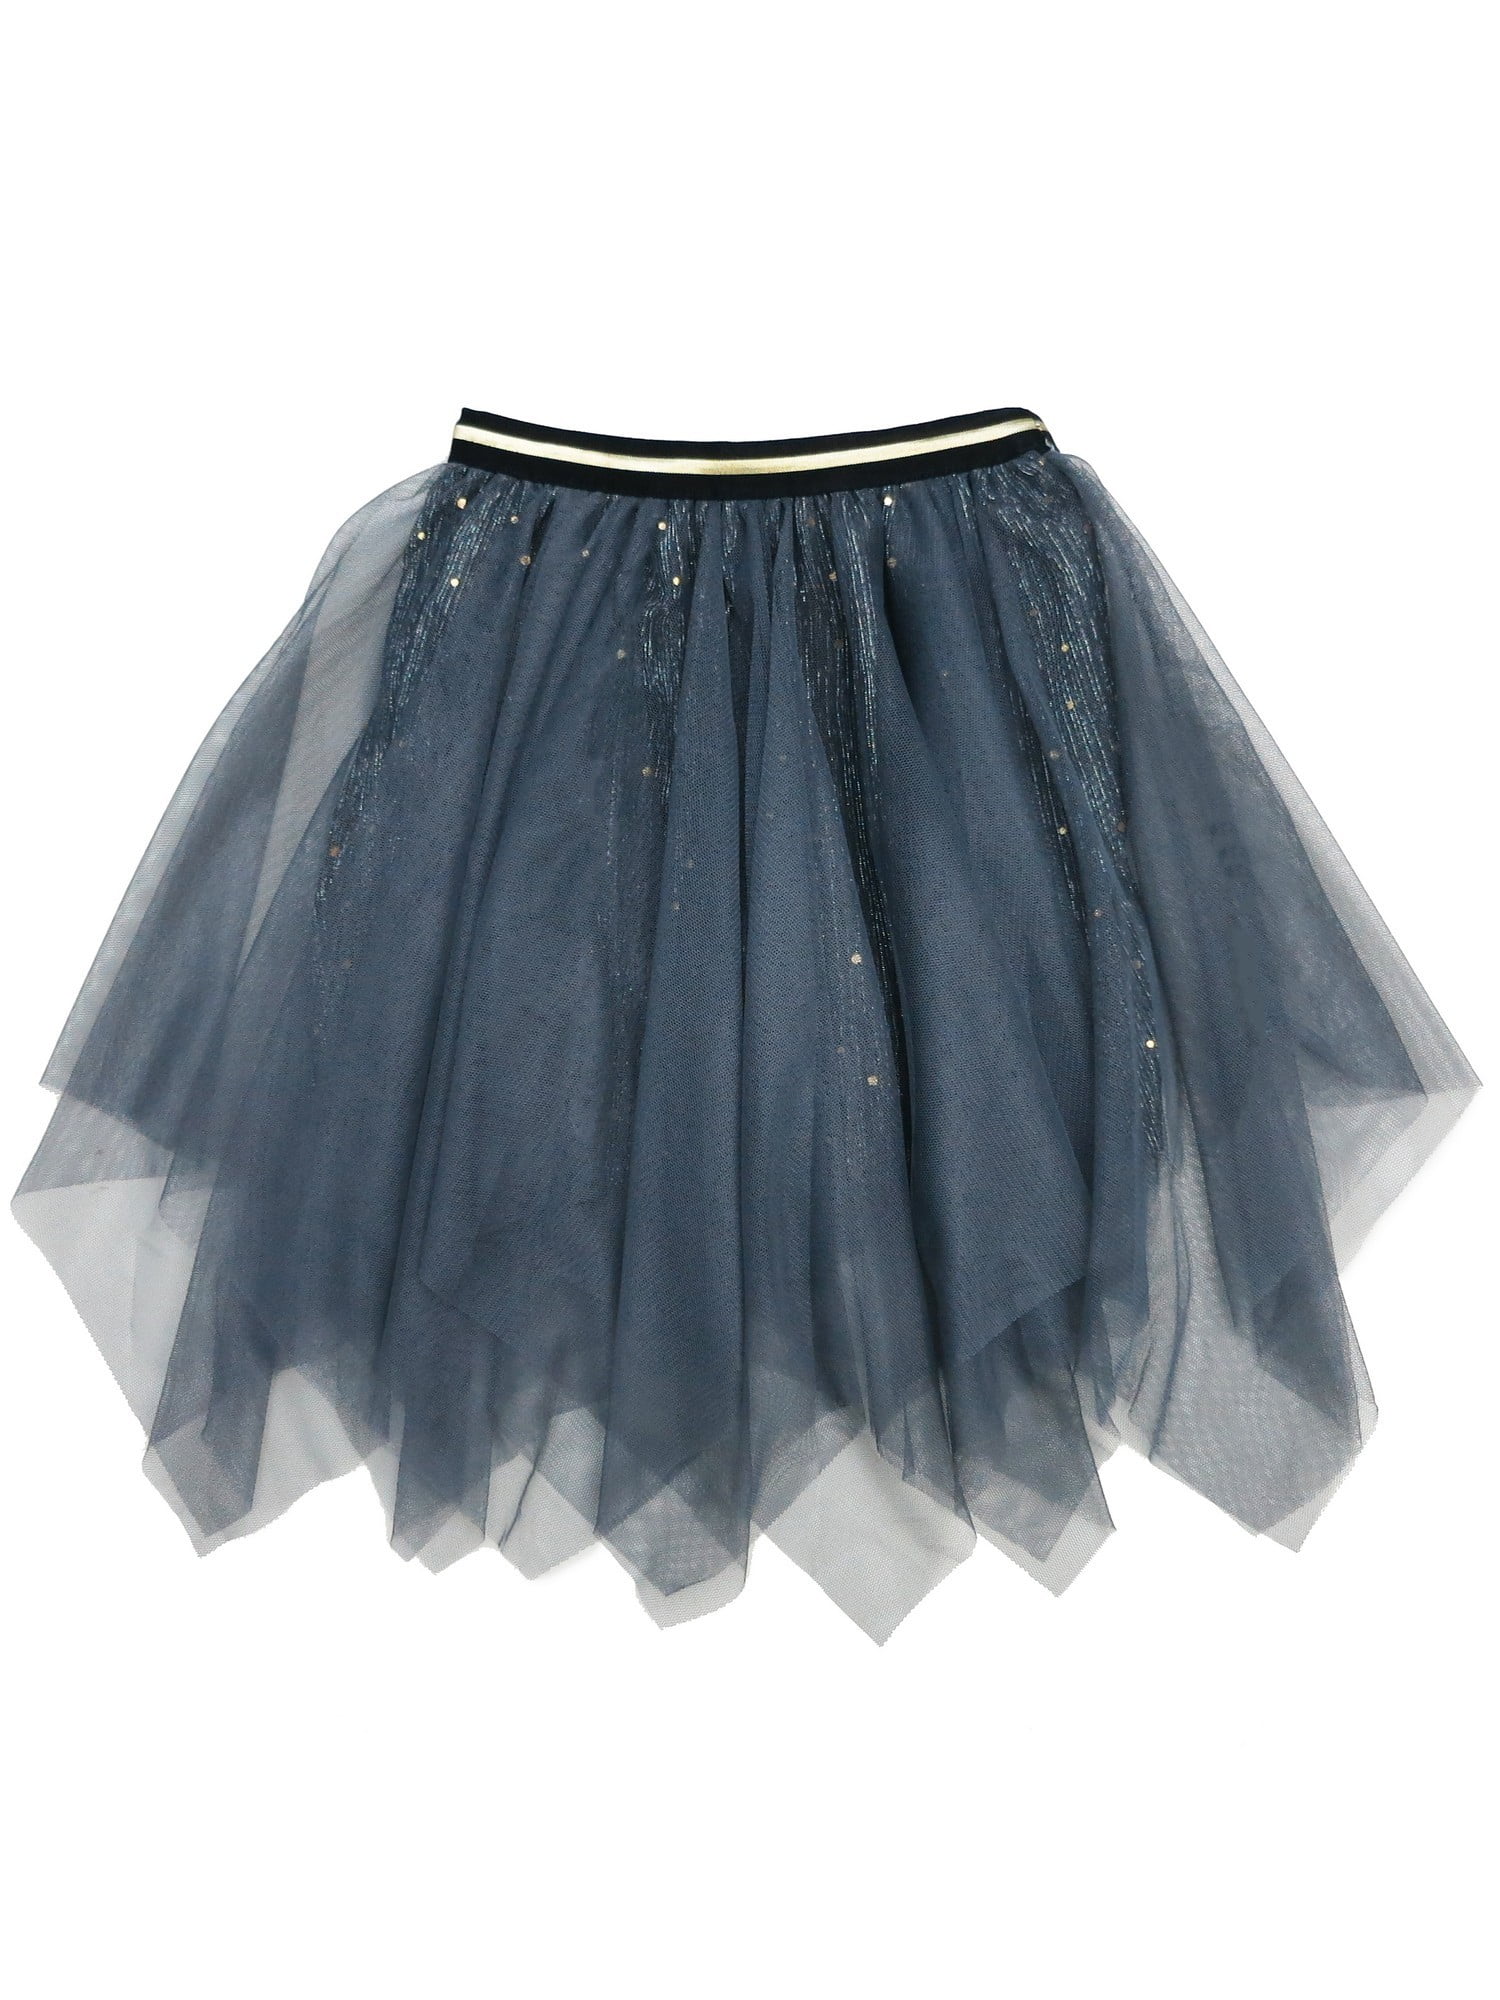 girls grey tutu skirt